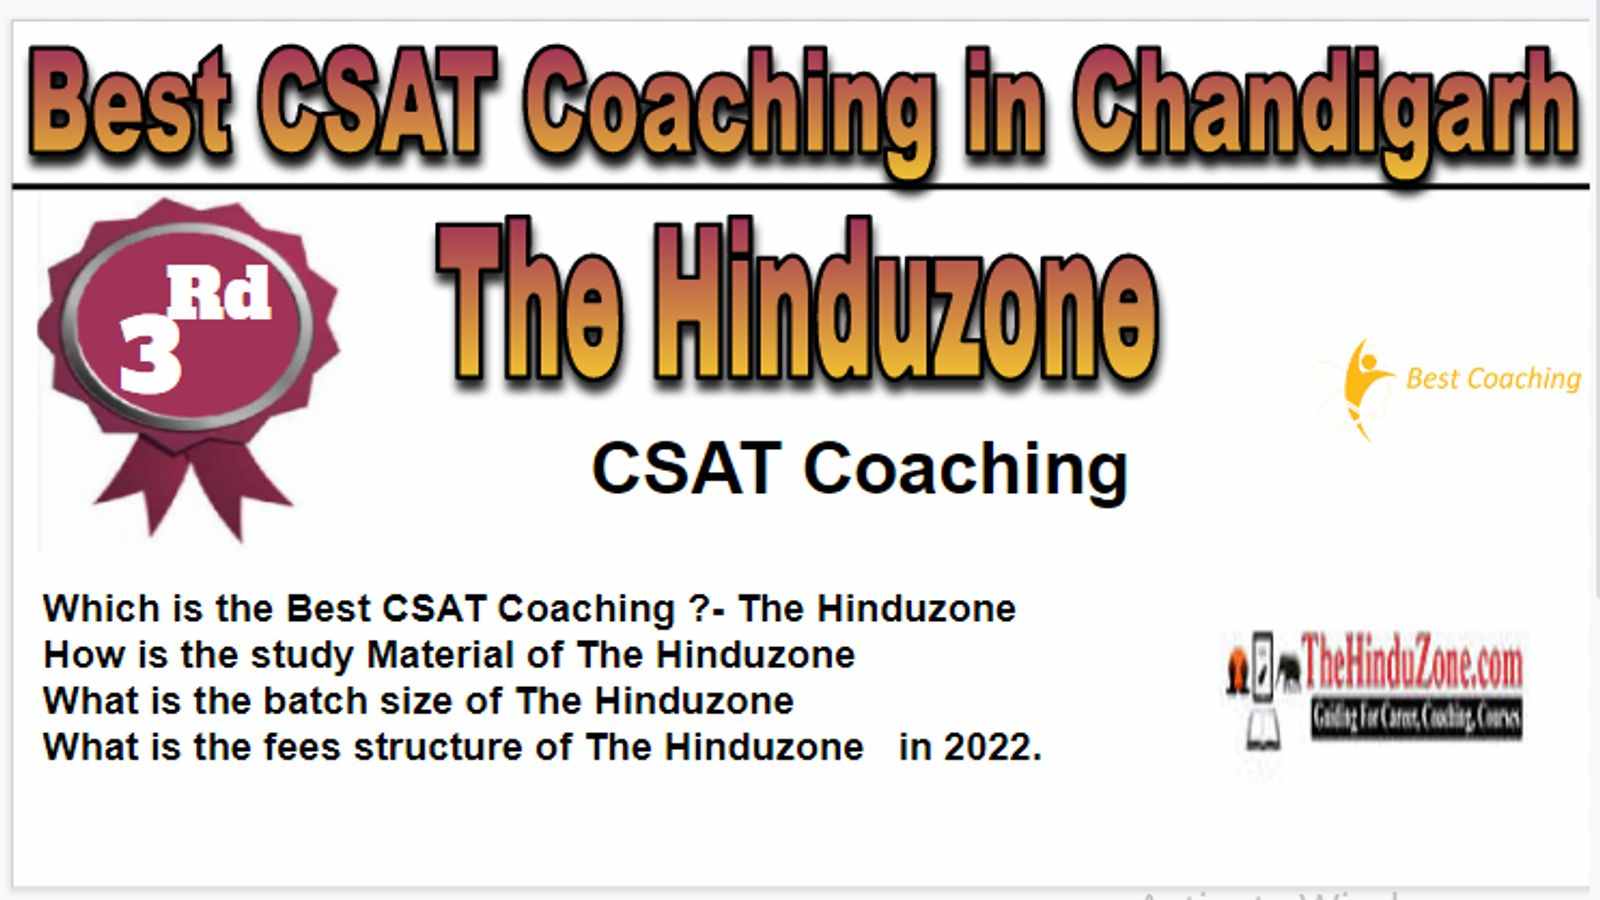 Rank 3 Best CSAT Coaching in Chandigarh